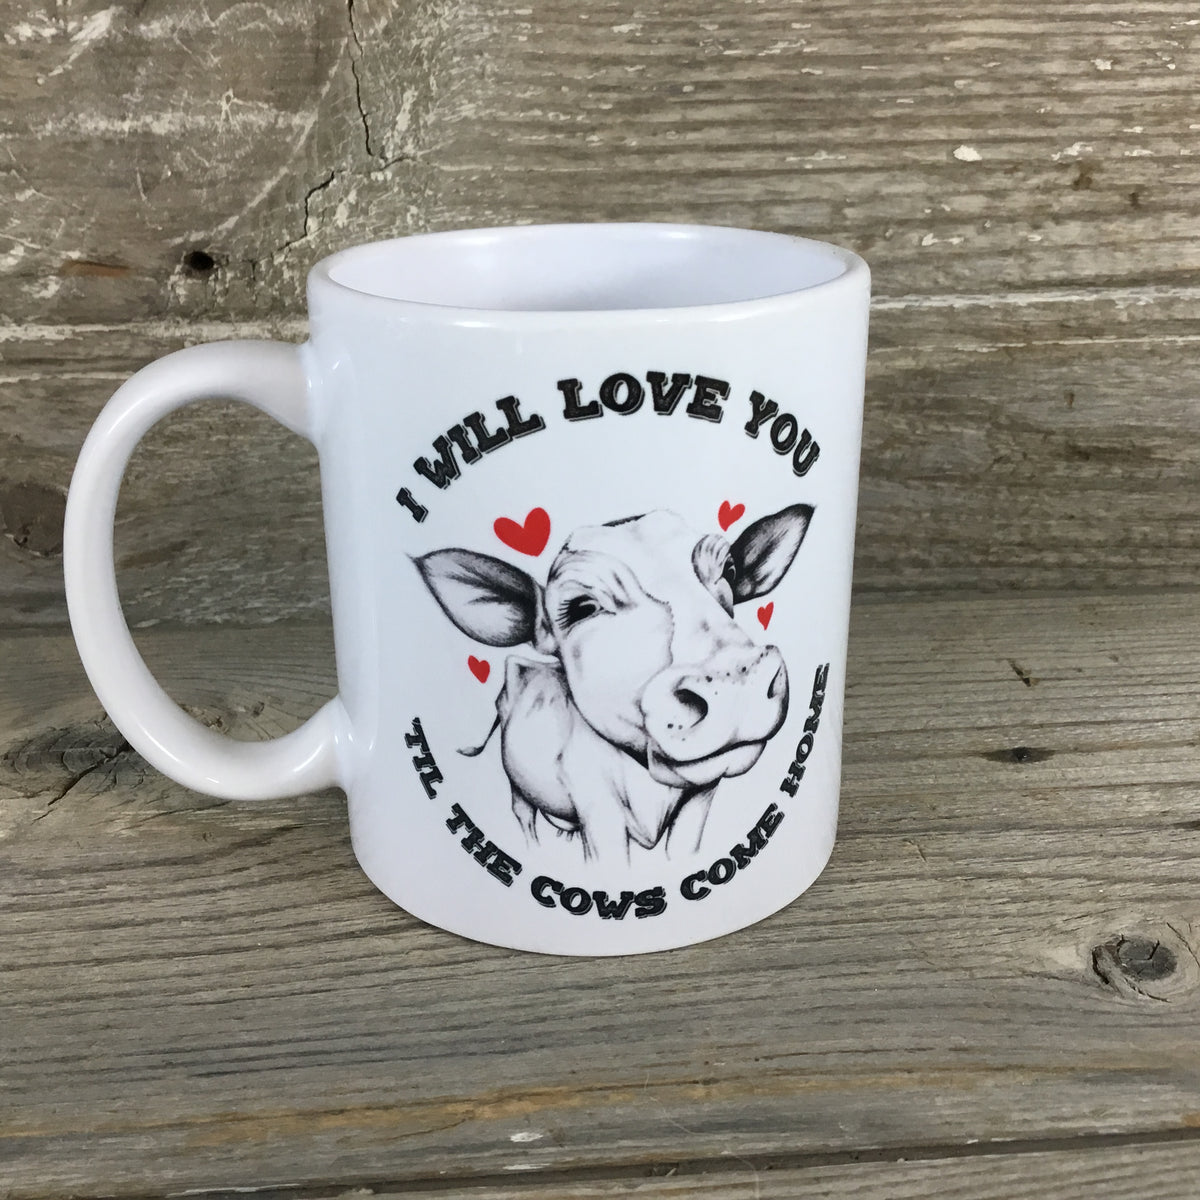 Till the cows come home mug